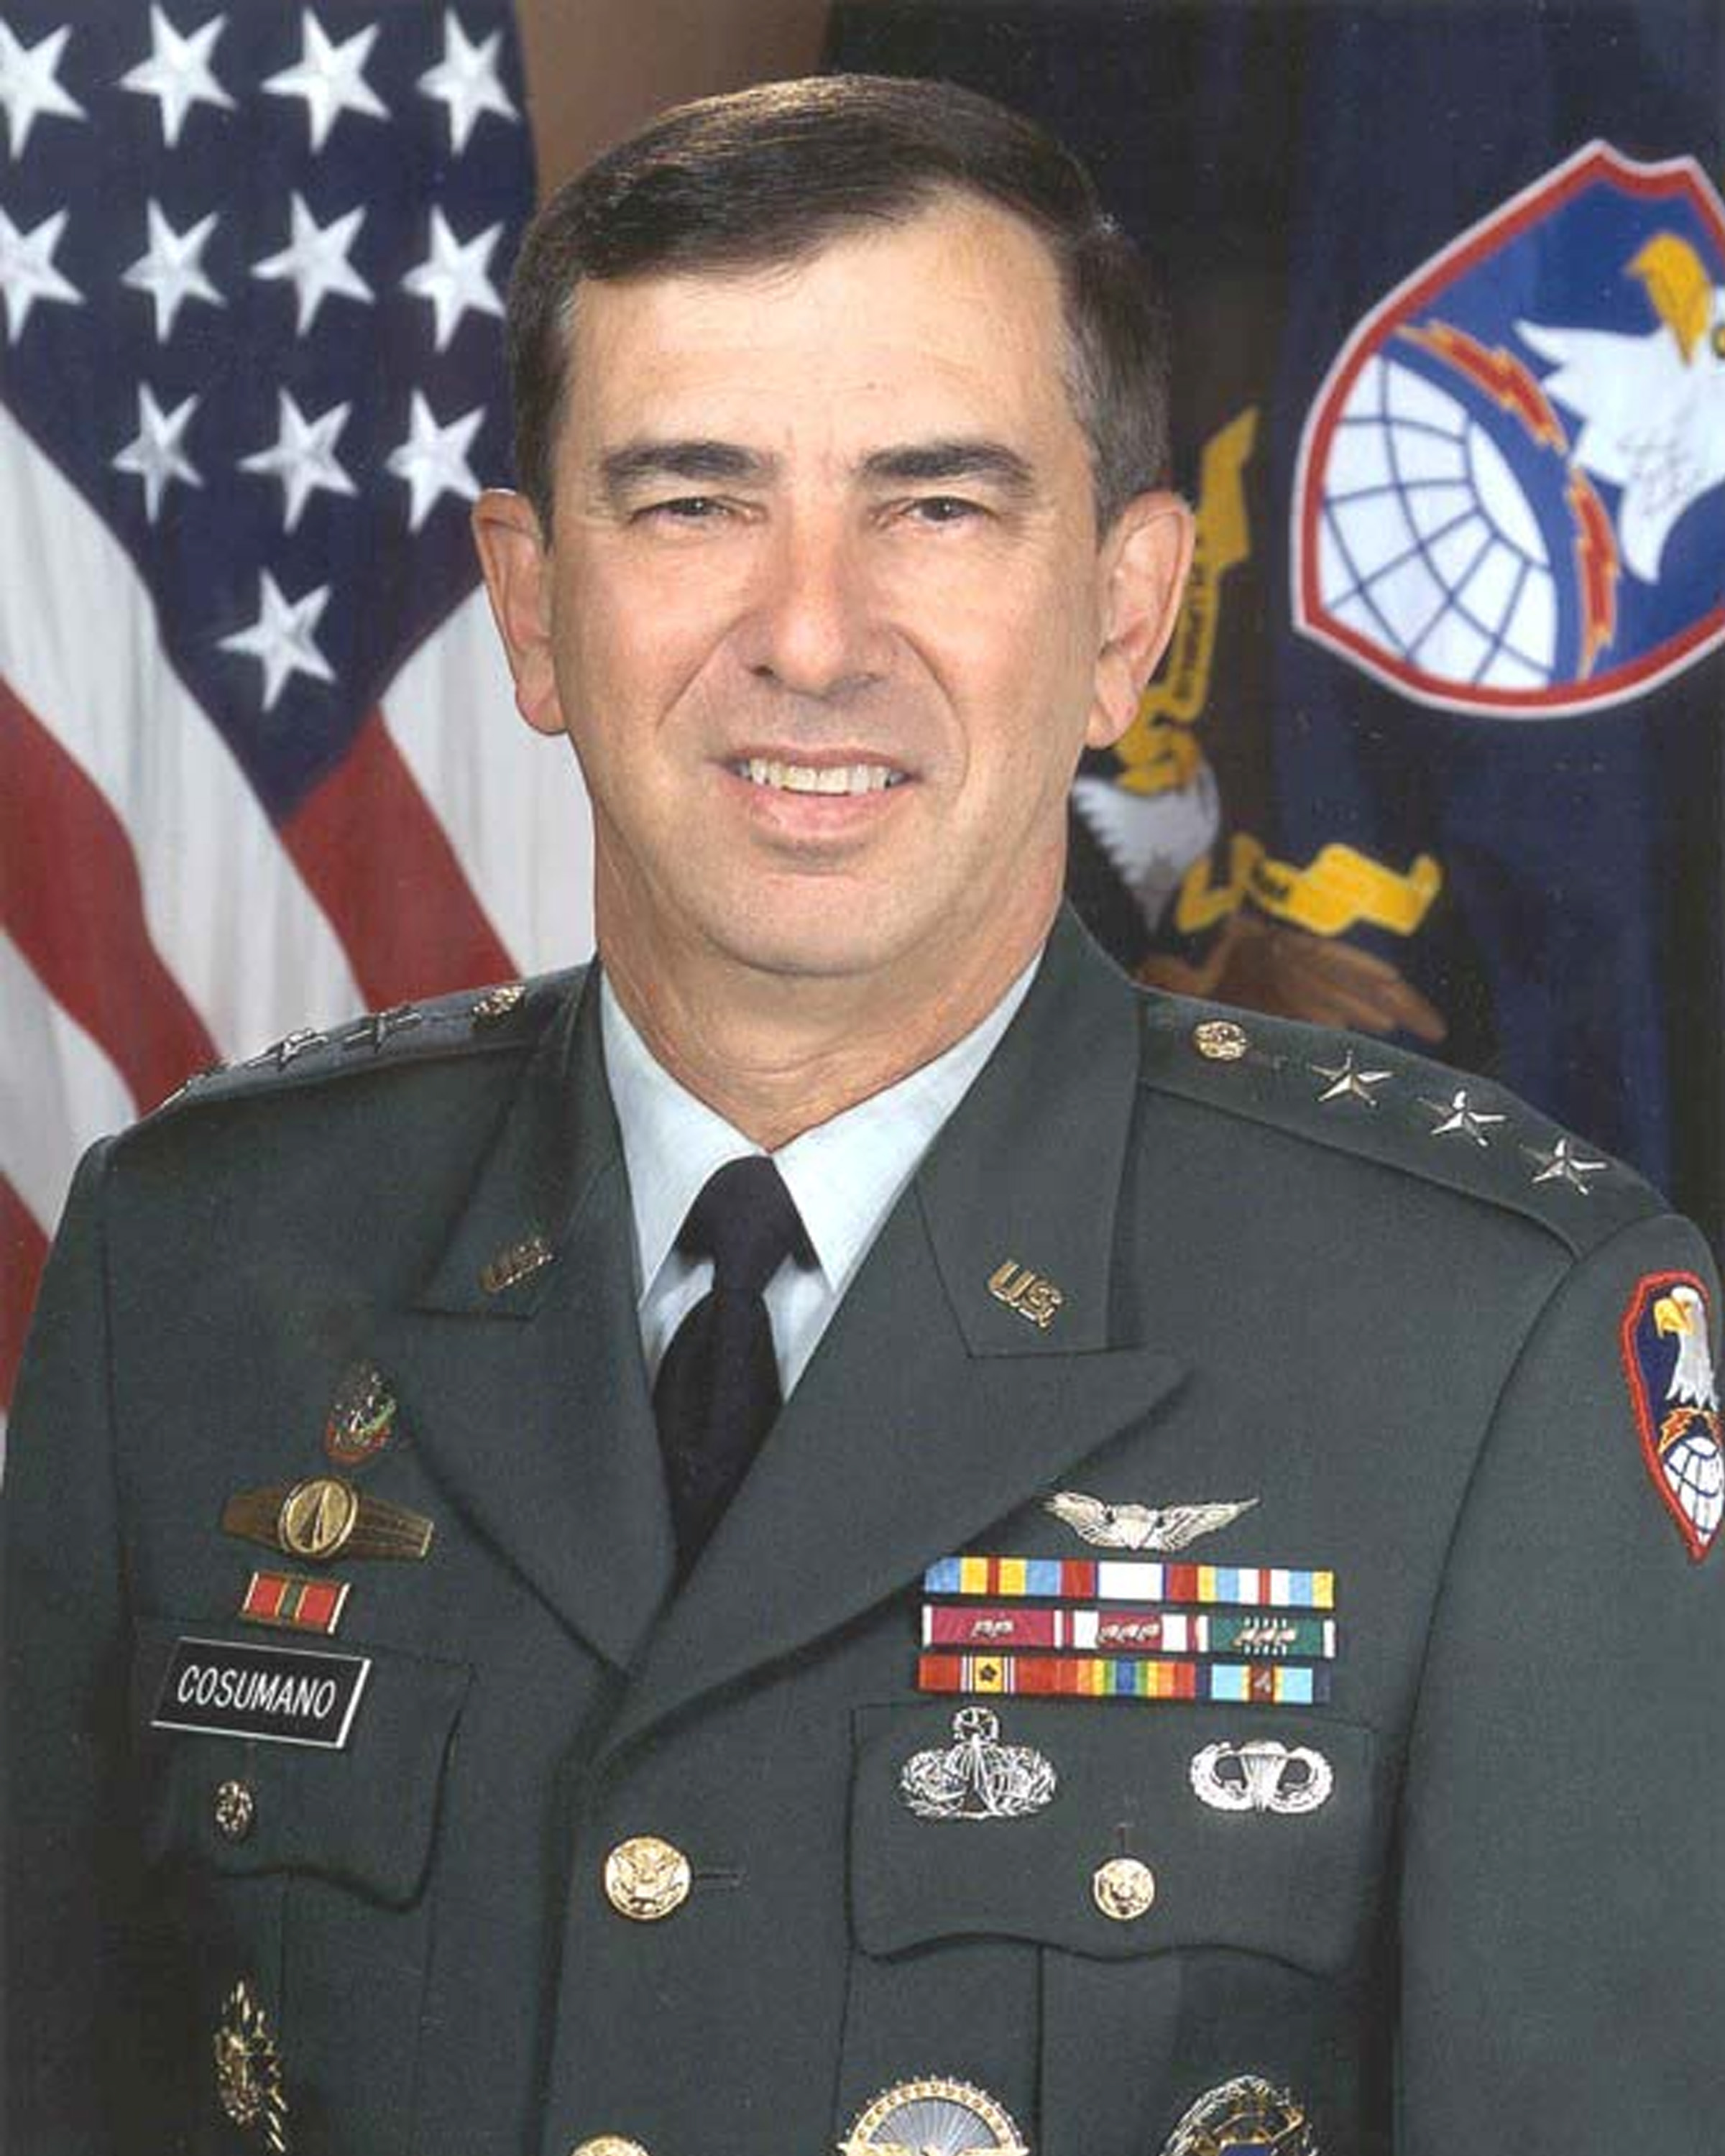 LTG Joseph M. Cosumano Jr., April 2001-December 2003